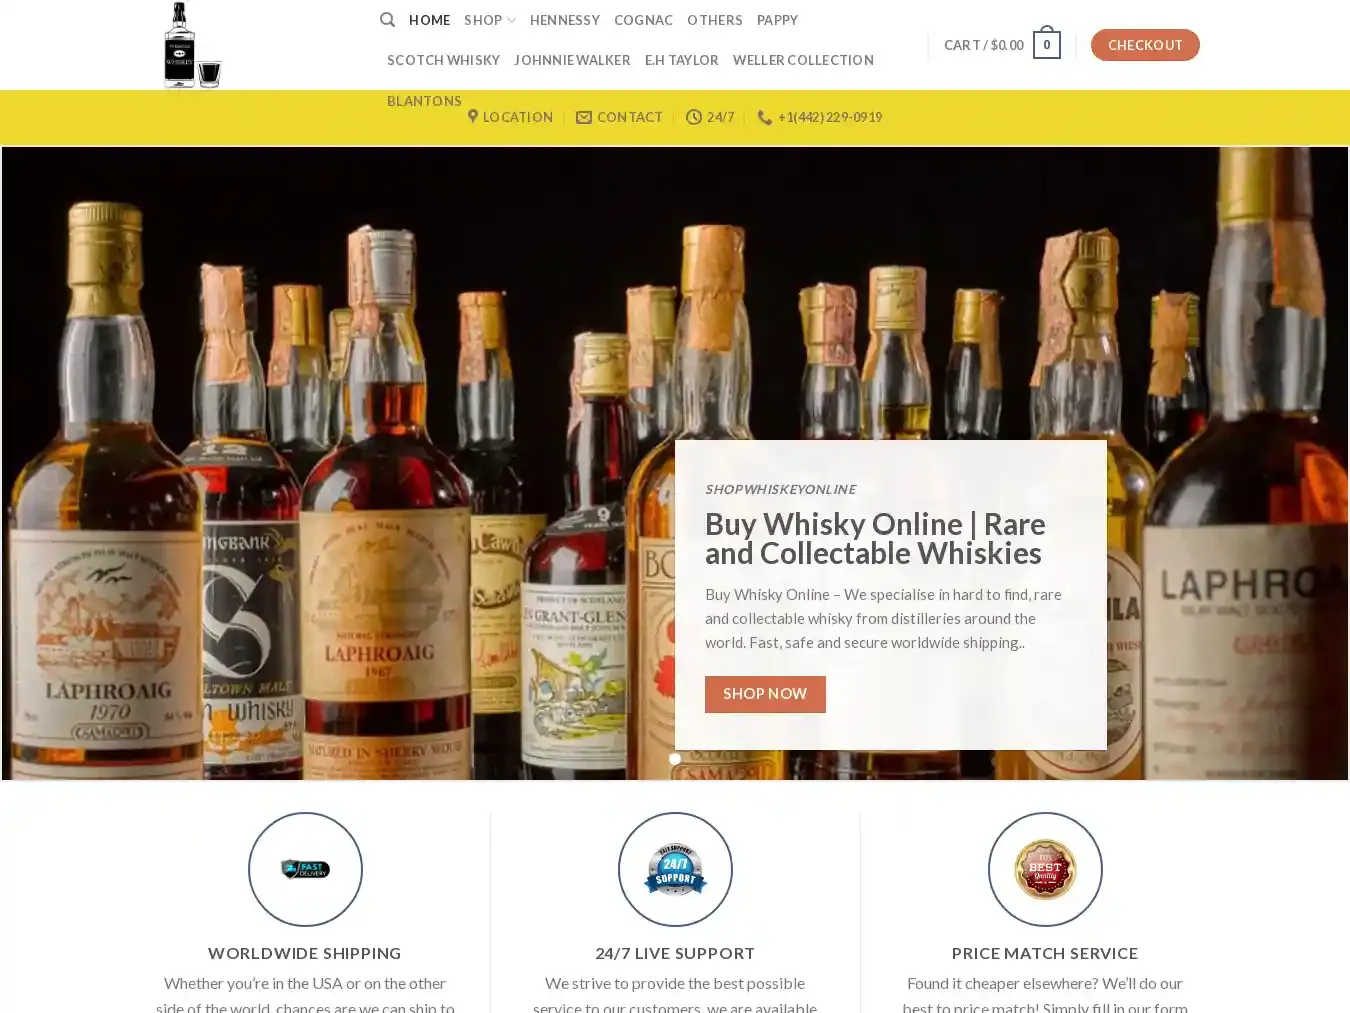 Shopwhiskeyonline.com Fraudulent Whisky website.